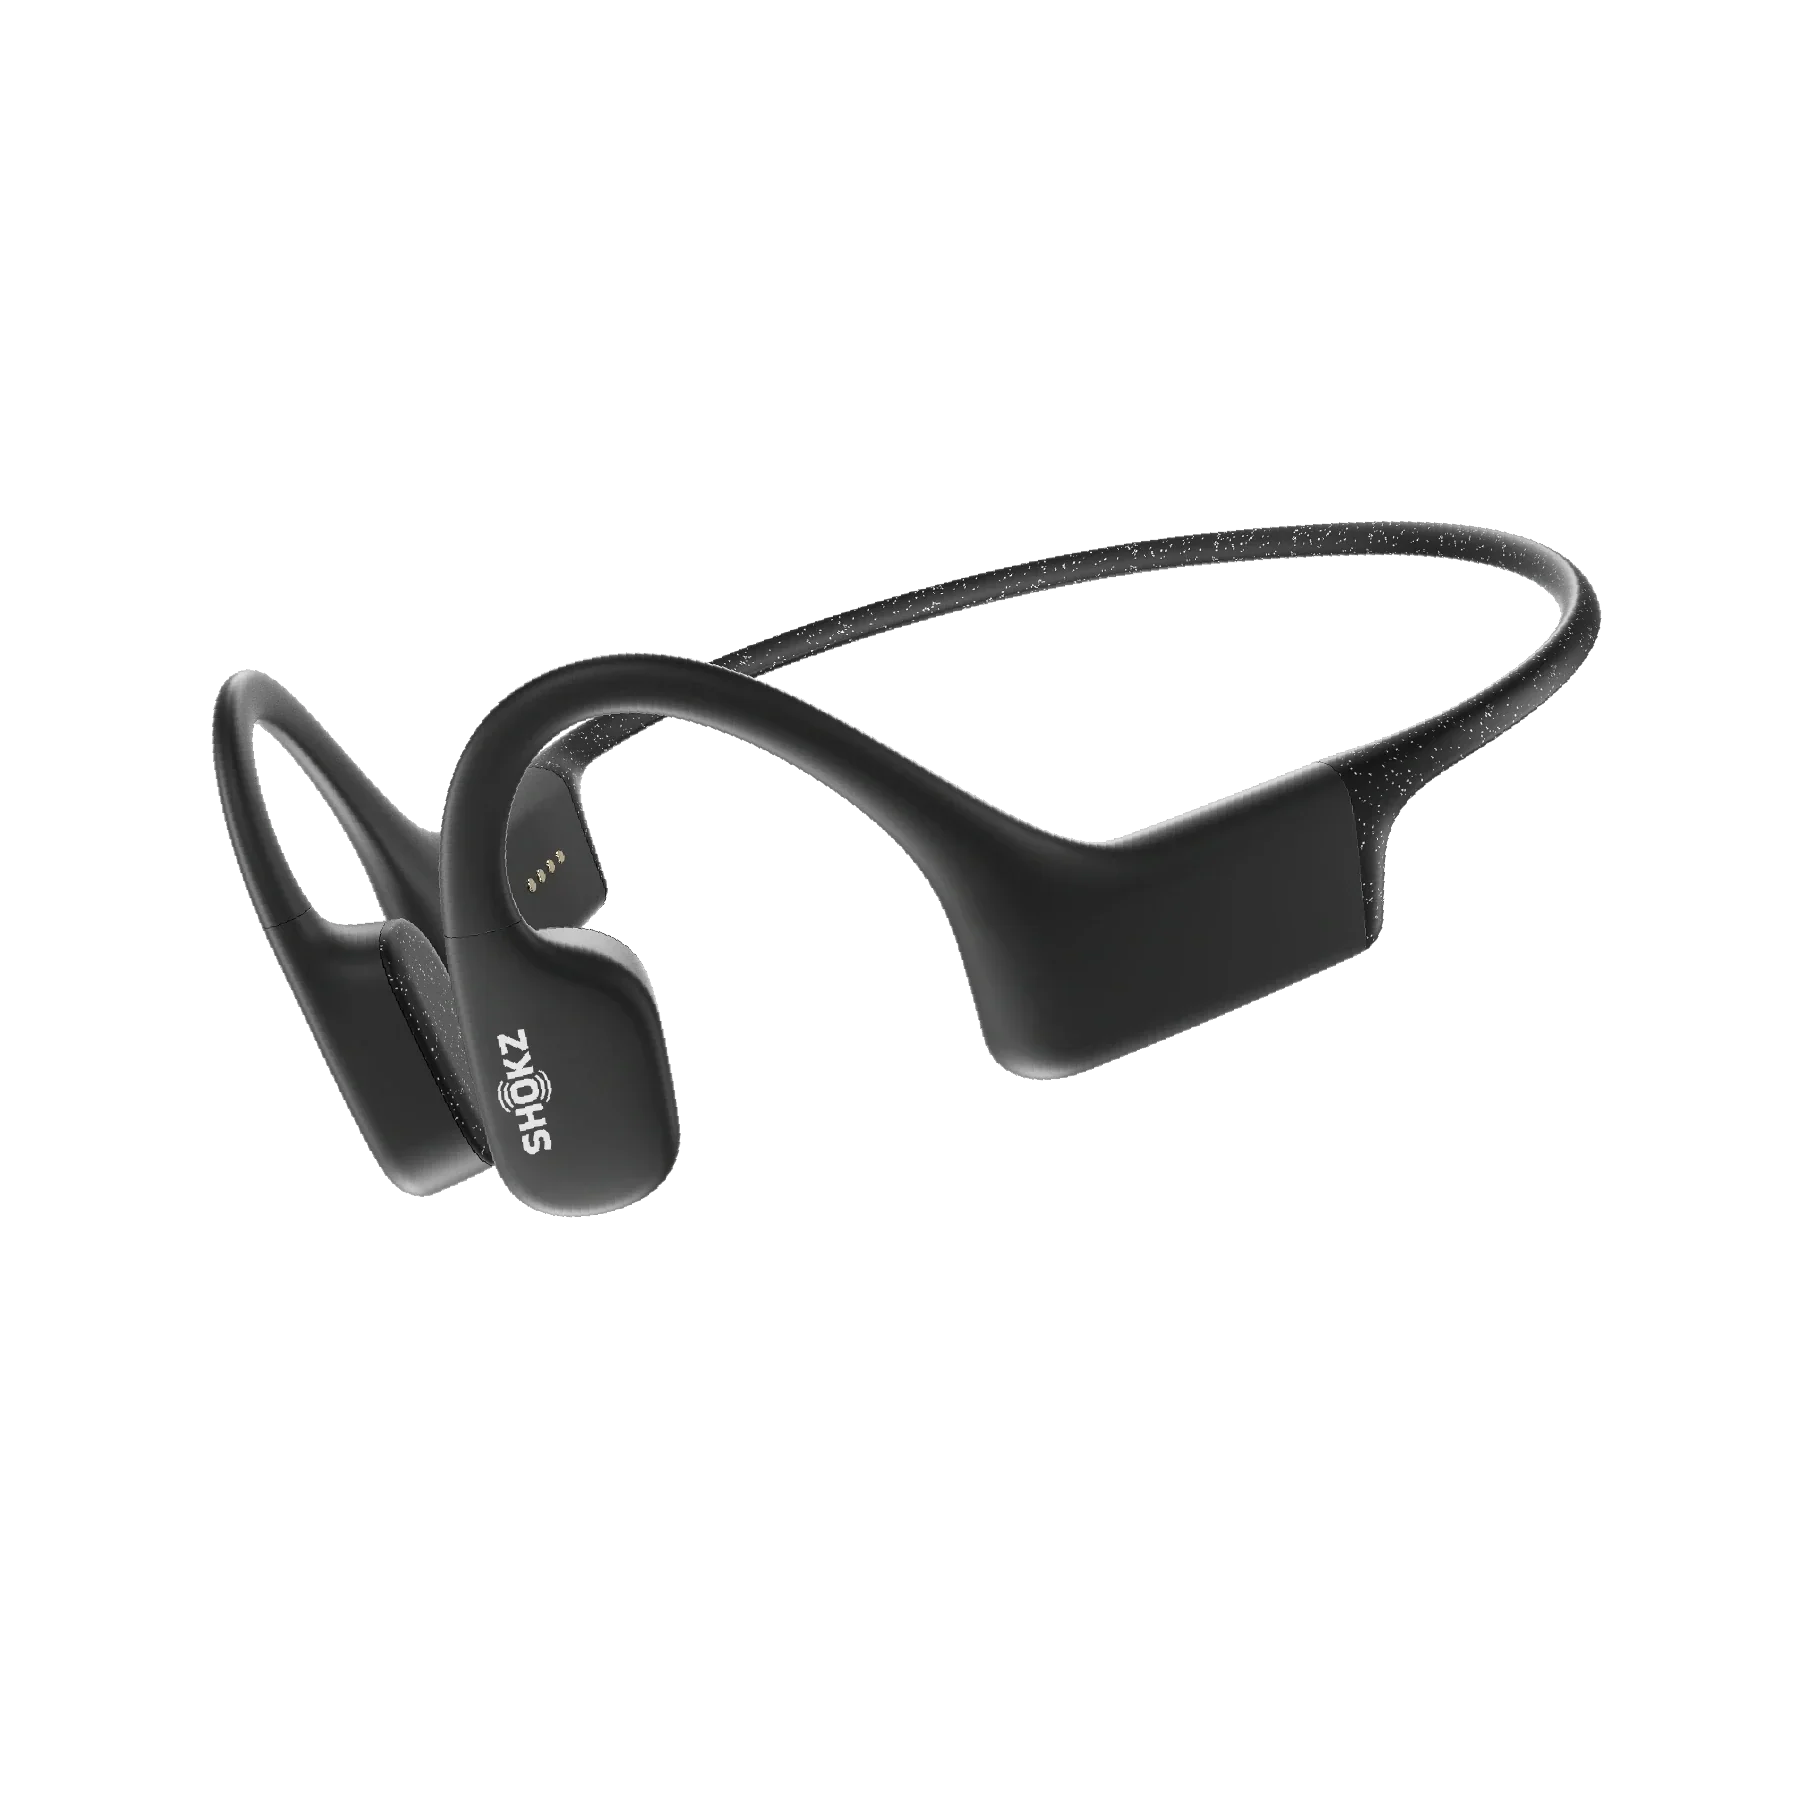 Shokz Openswim Bone Conduction Wireless Headphones IP68 Waterproof